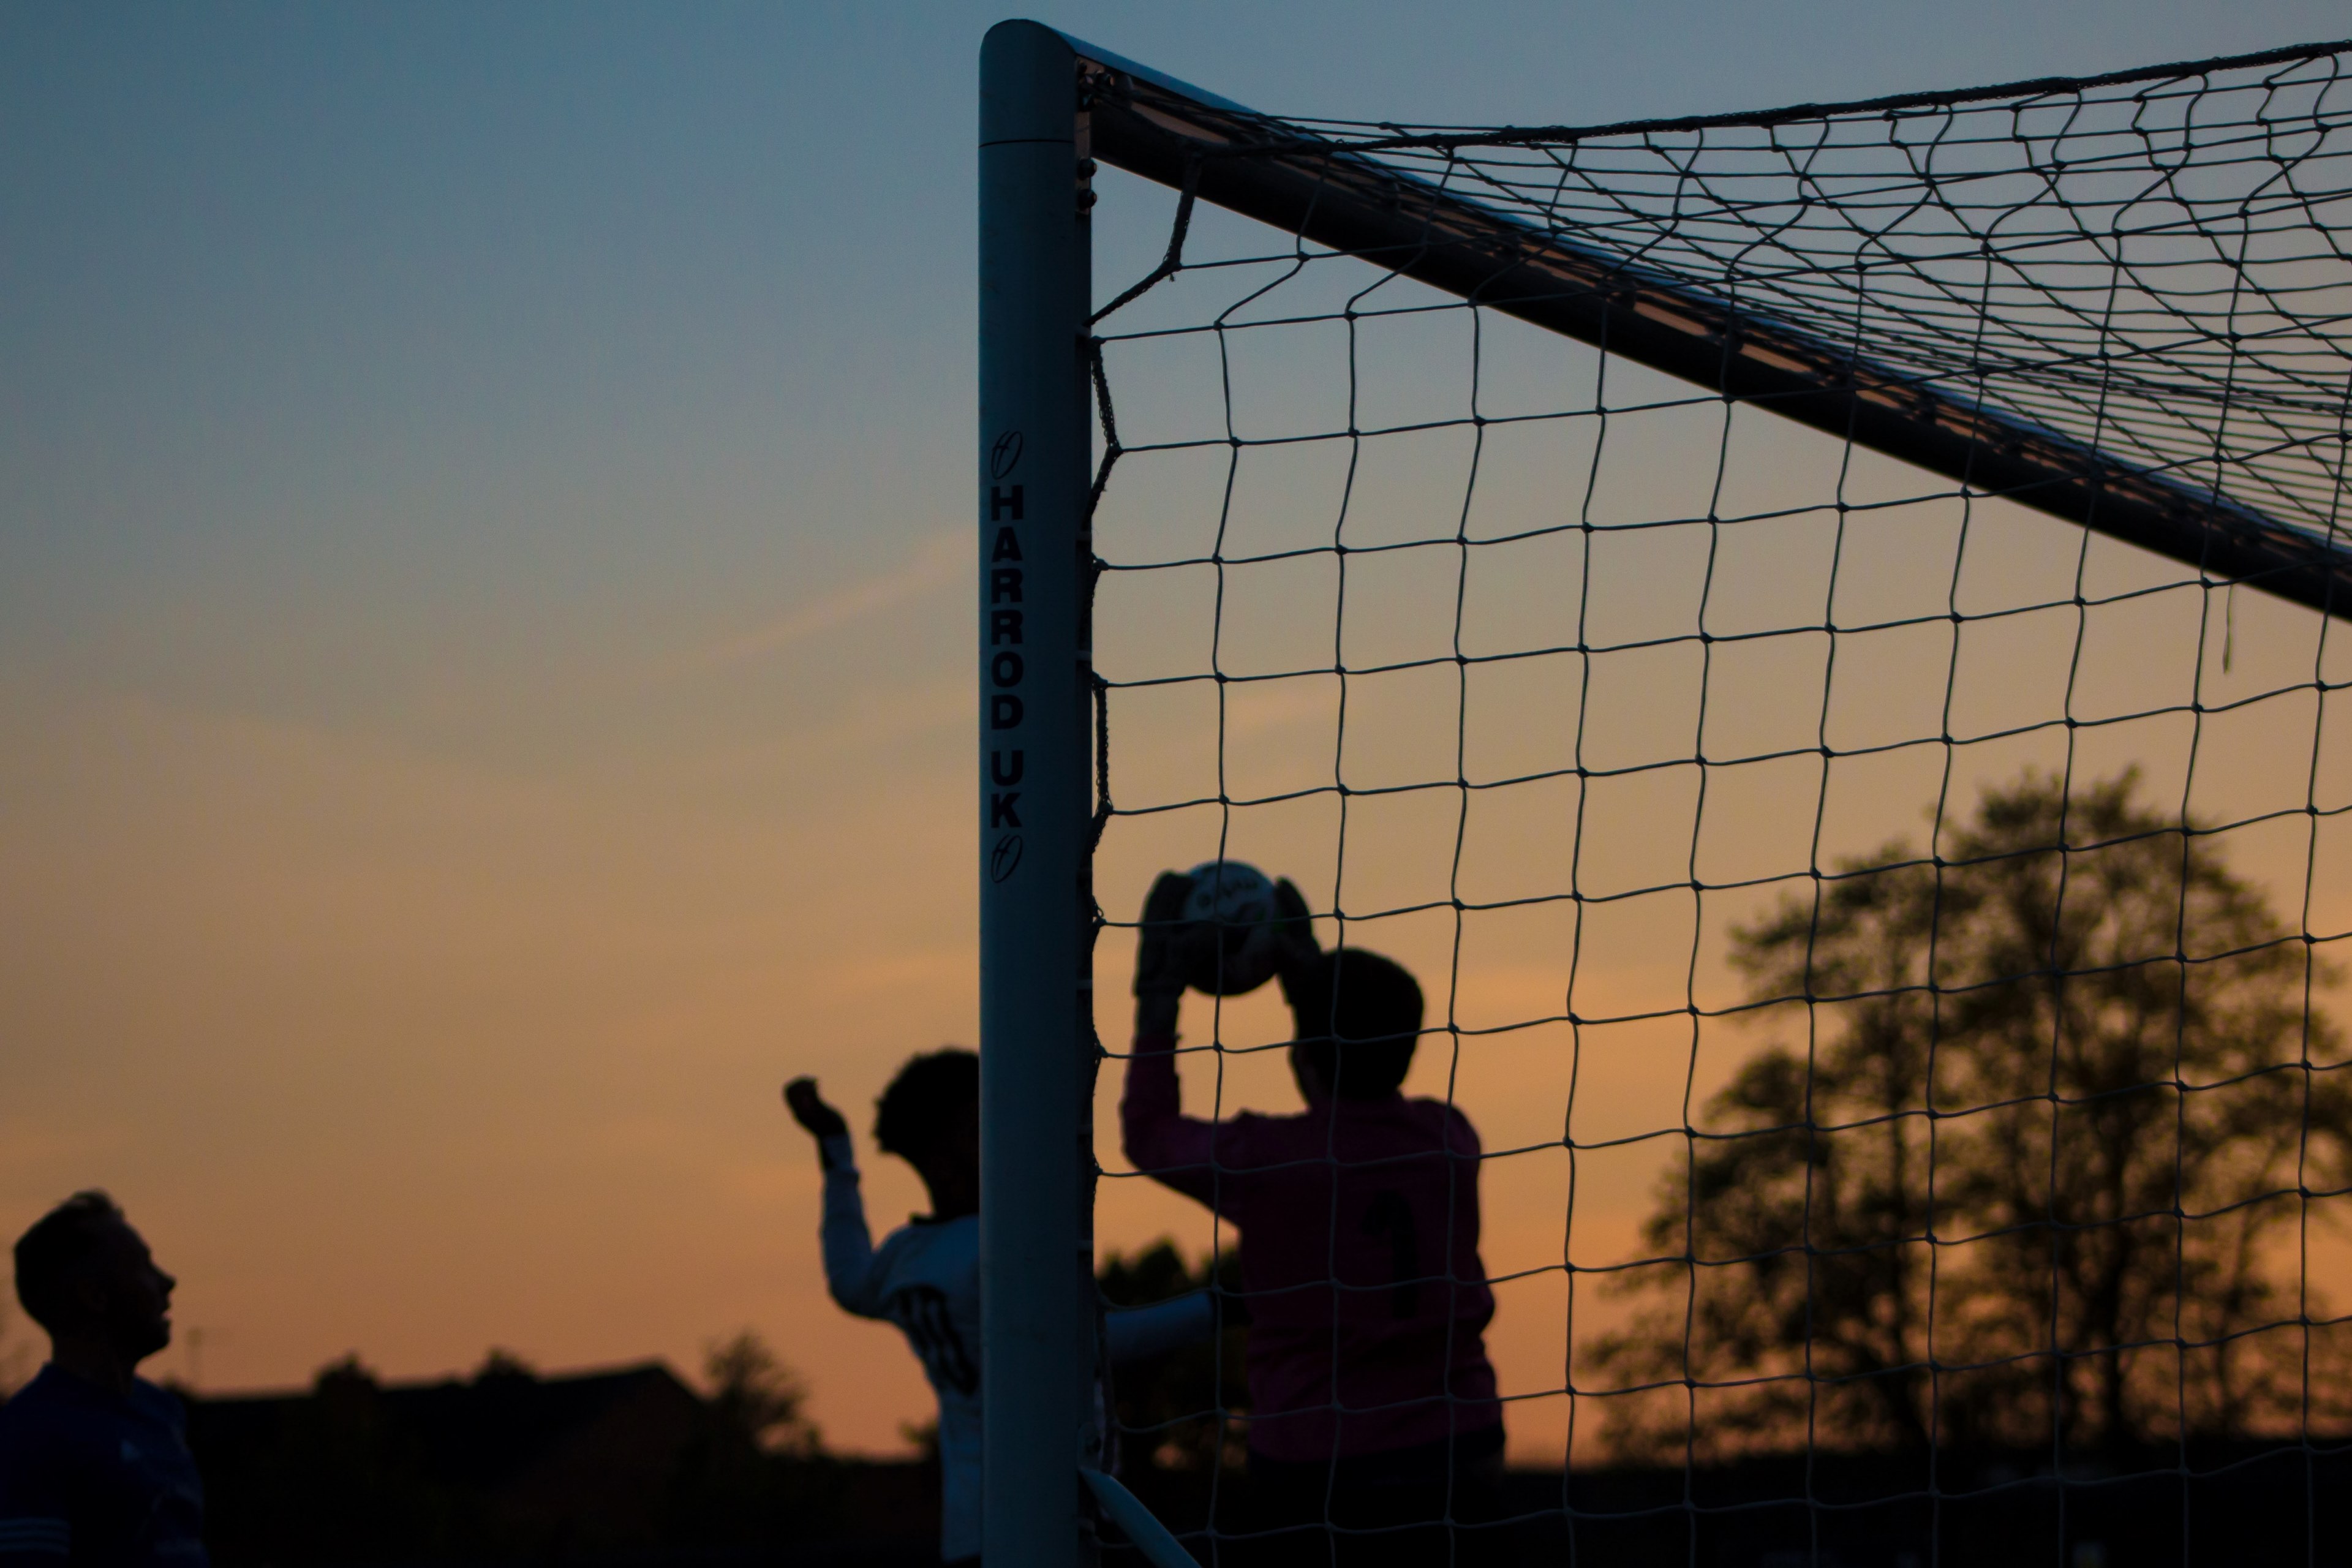 Wallpaper / three children play soccer at sunset at ewen fields, silhouette goalkeeper catching the ball 4k wallpaper free download